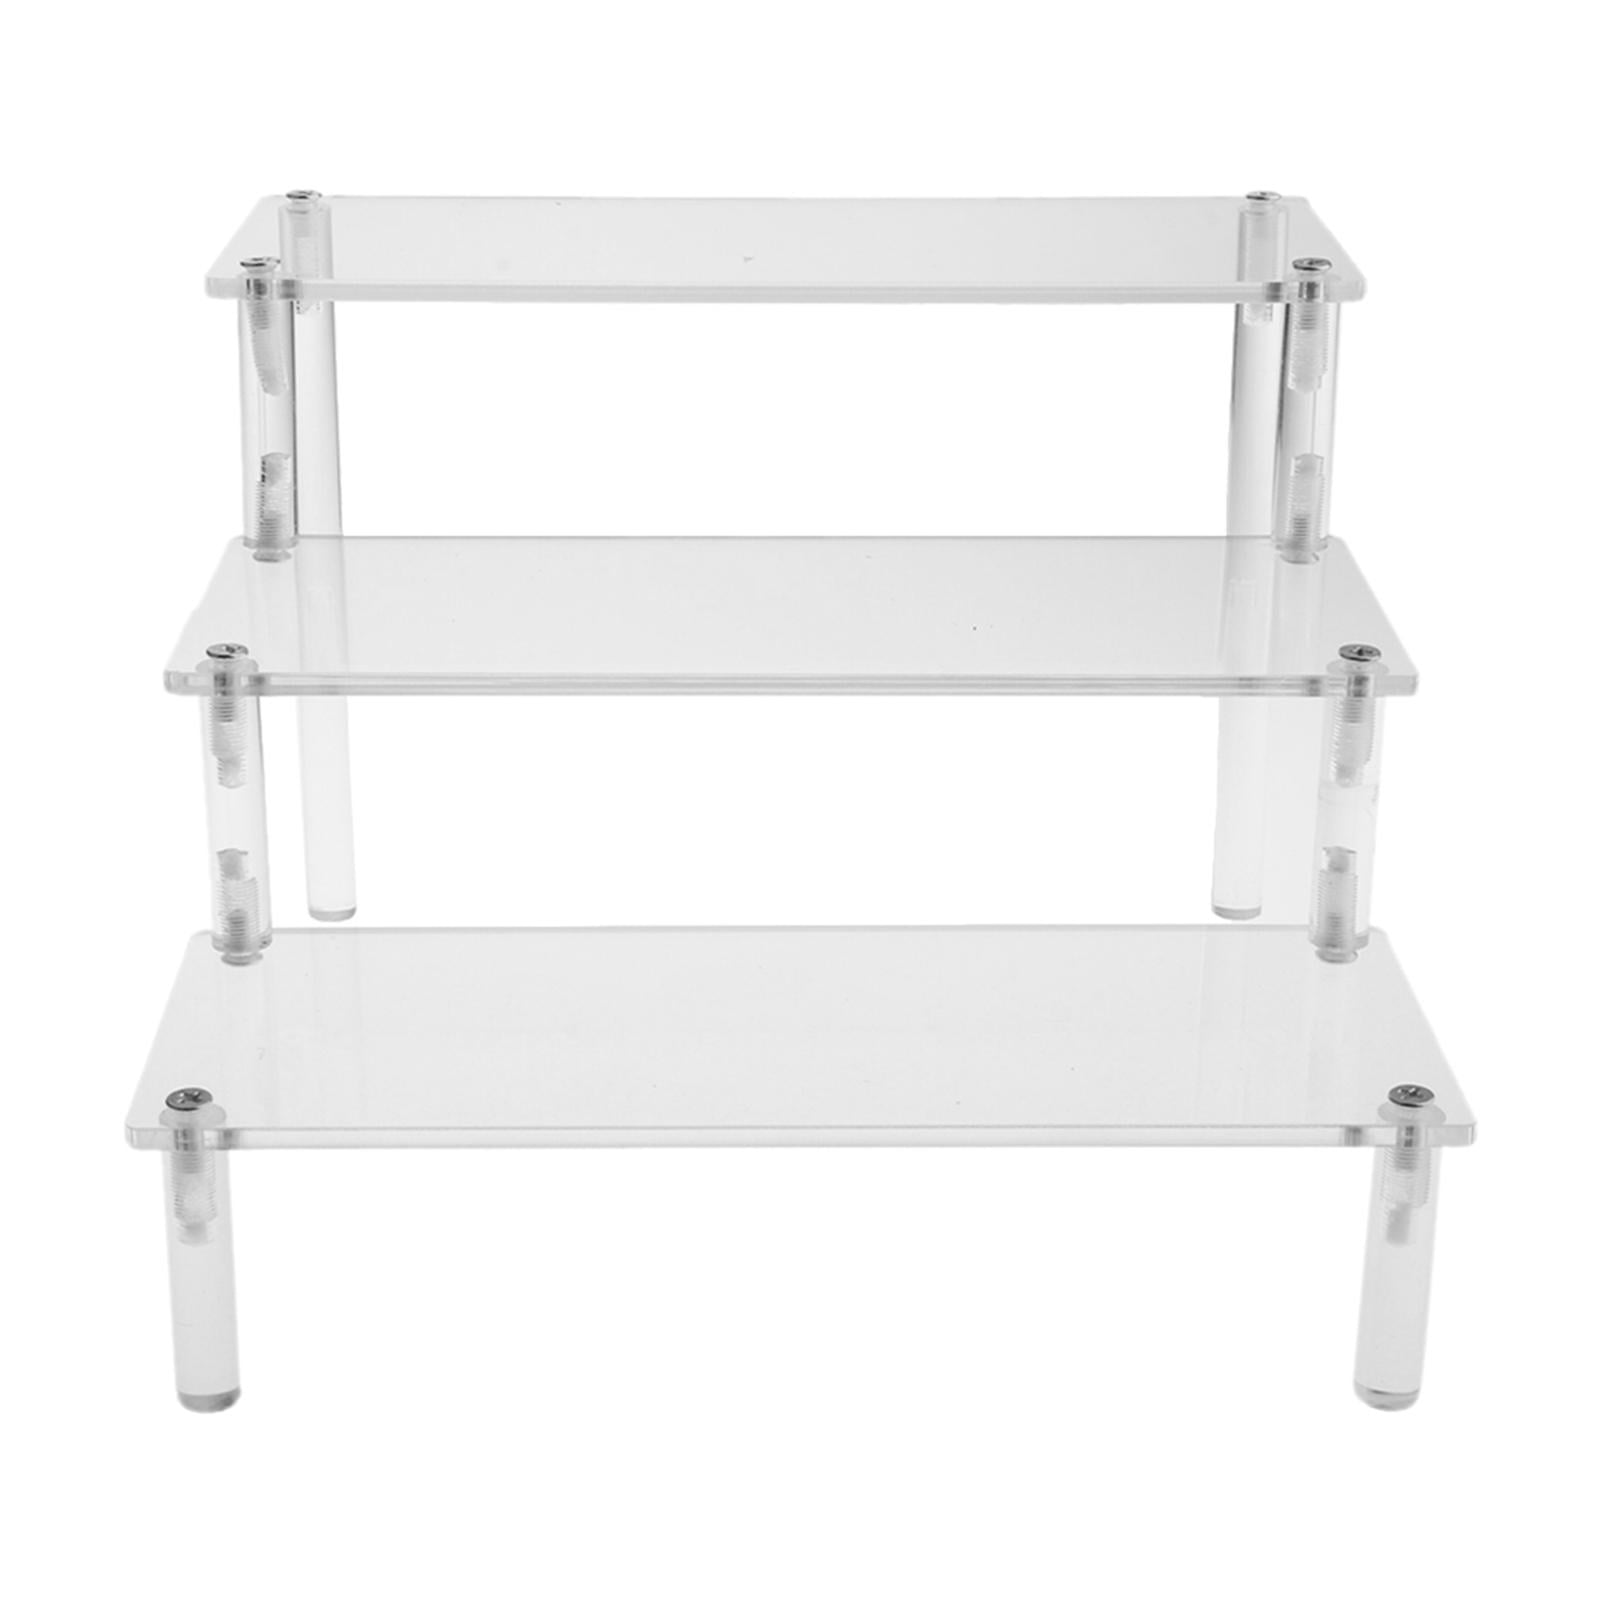 5-Tier Acrylic Wooden Display Rack Model Ladder Riser Stand Storage Holder 